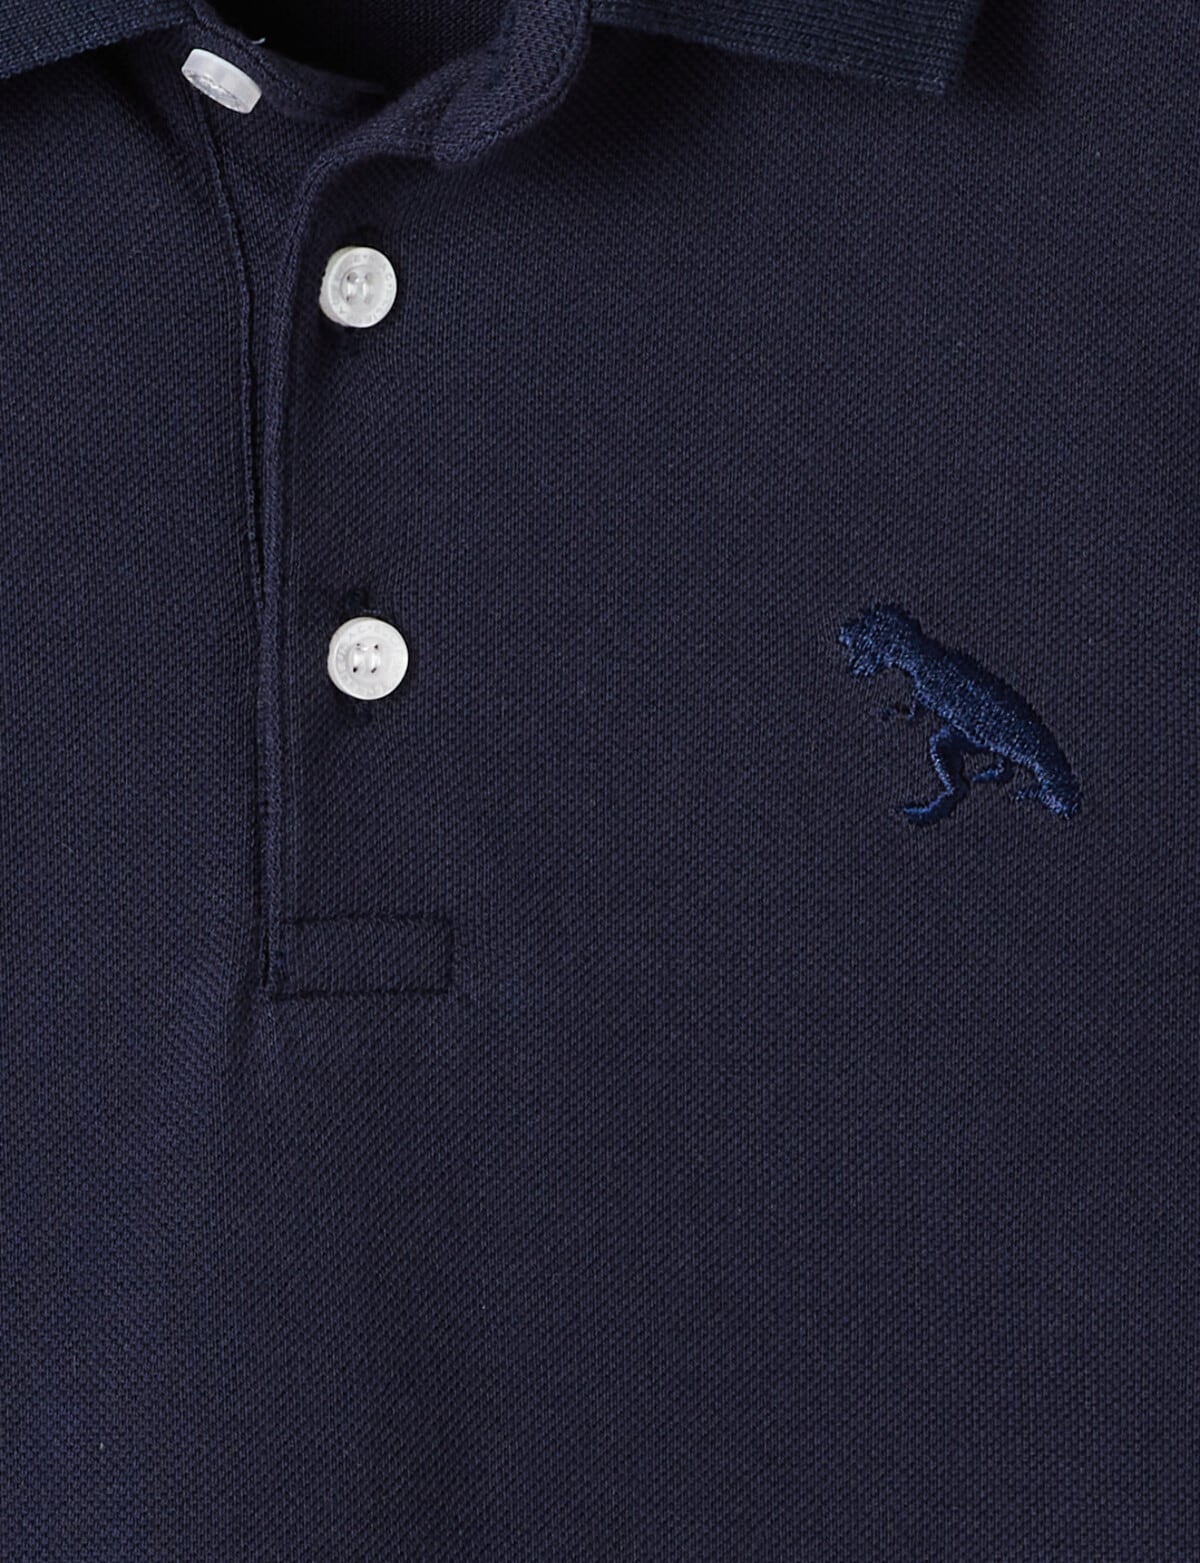 Mac & Ellie Short Sleeve Polo, Navy - T-Shirts & Shirts